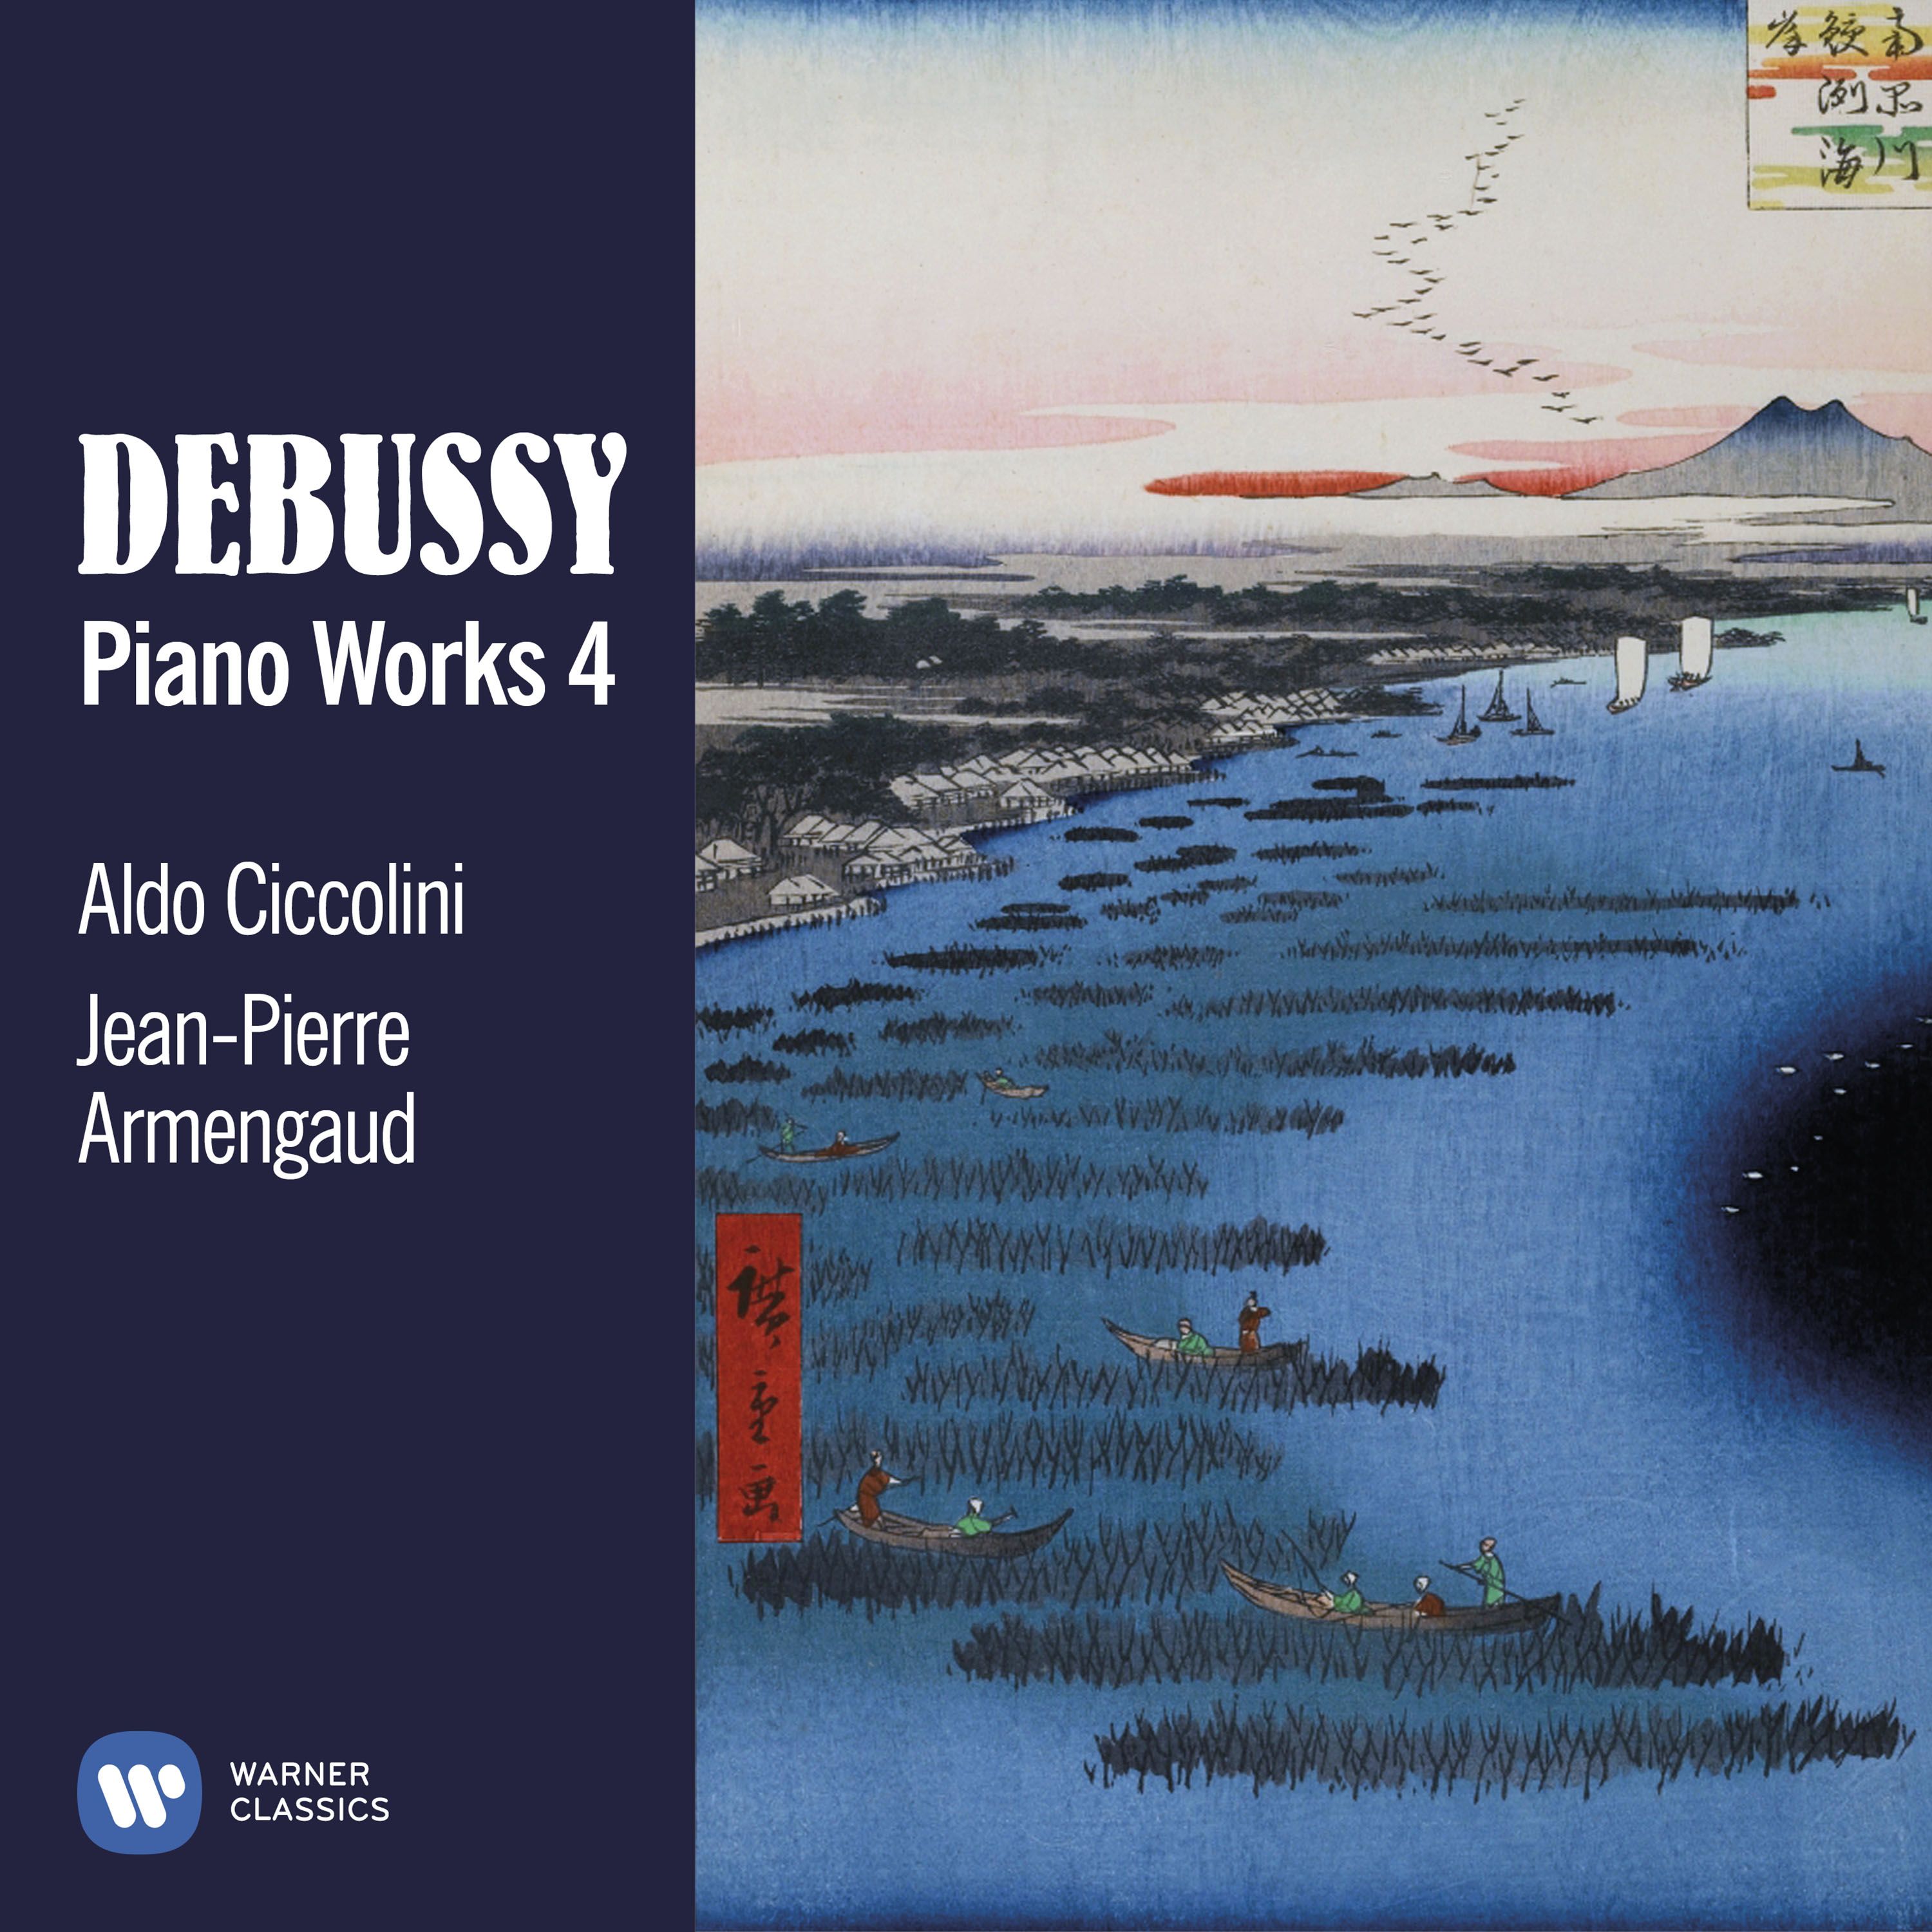 Debussy: Orchestral Works, Vol. 4